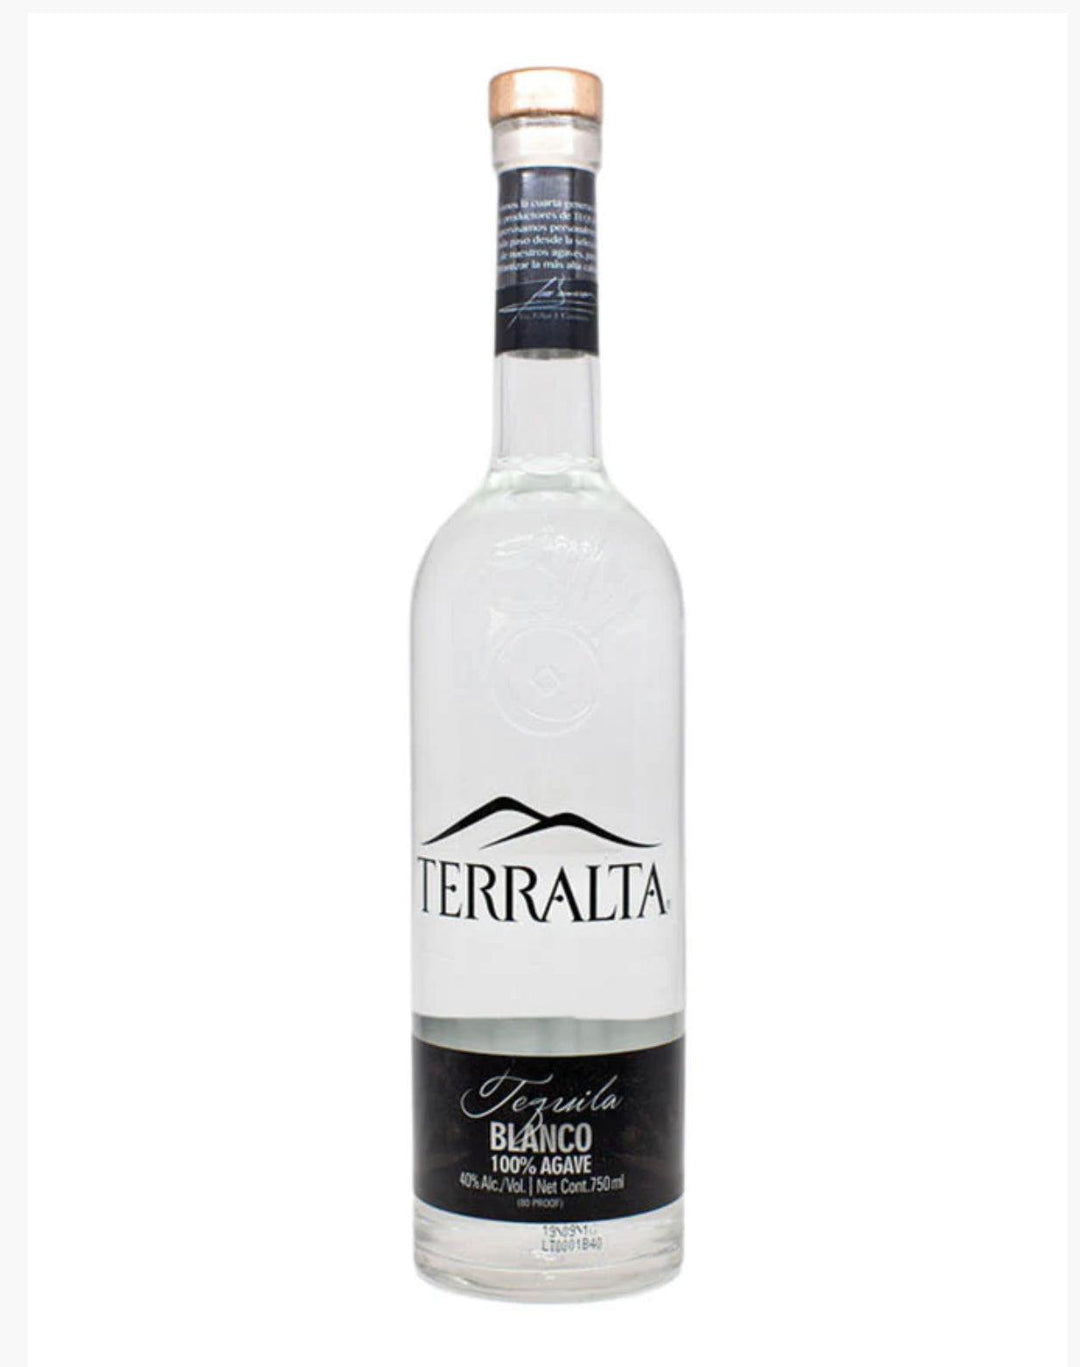 Terralta Blanco Tequila - Liquor Luxe